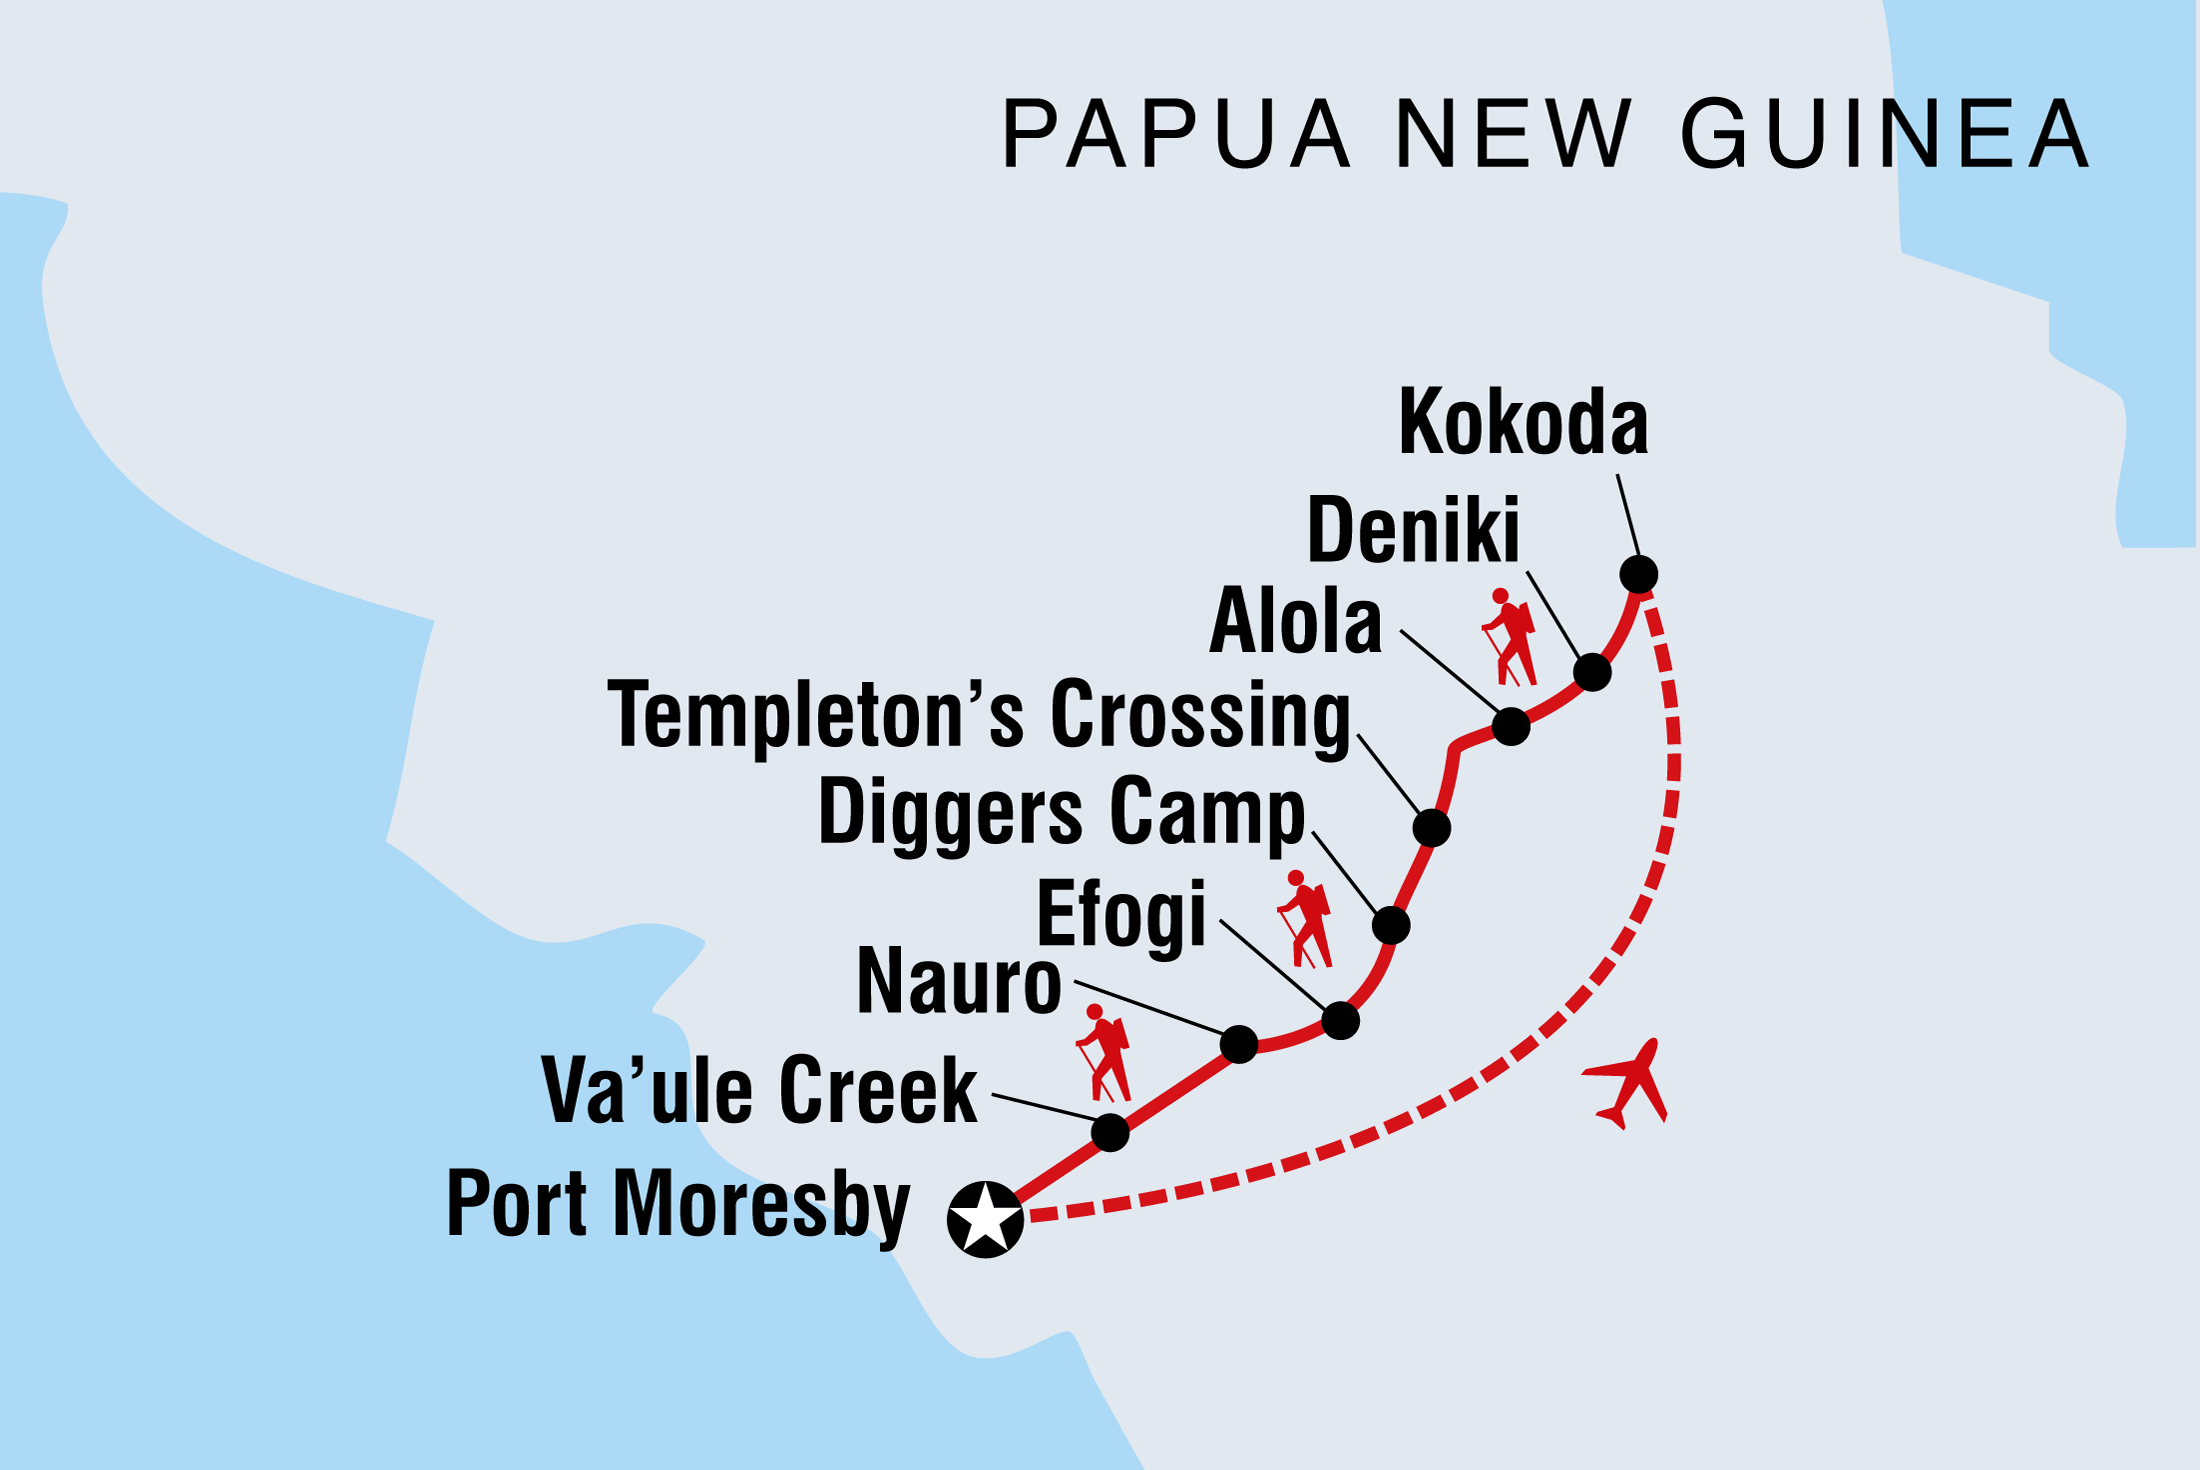 Map of The Kokoda Track including Papua New Guinea